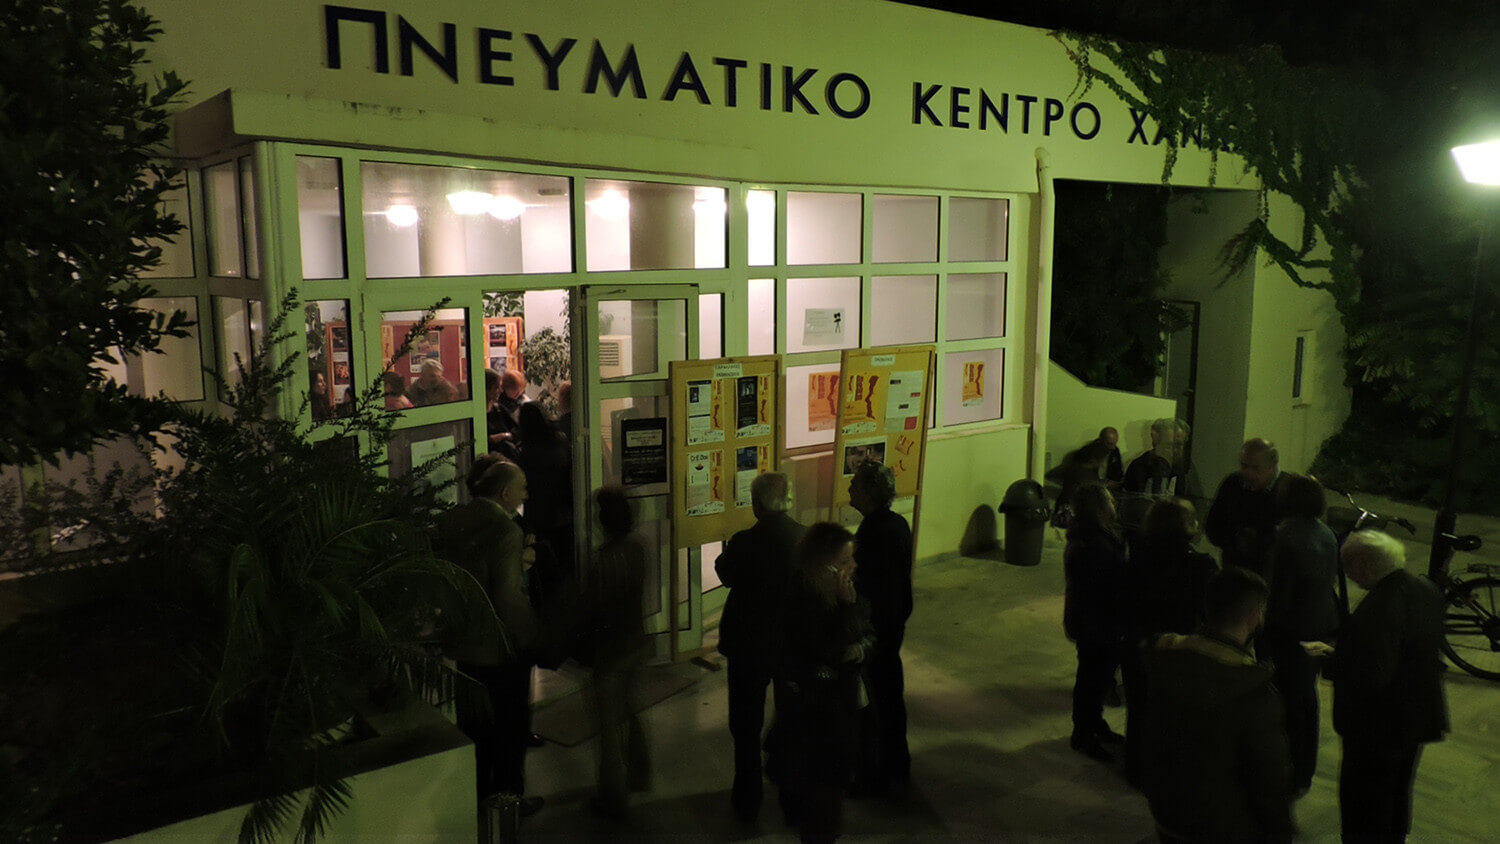 Pnevmatiko Kentro - Chania Film Festival